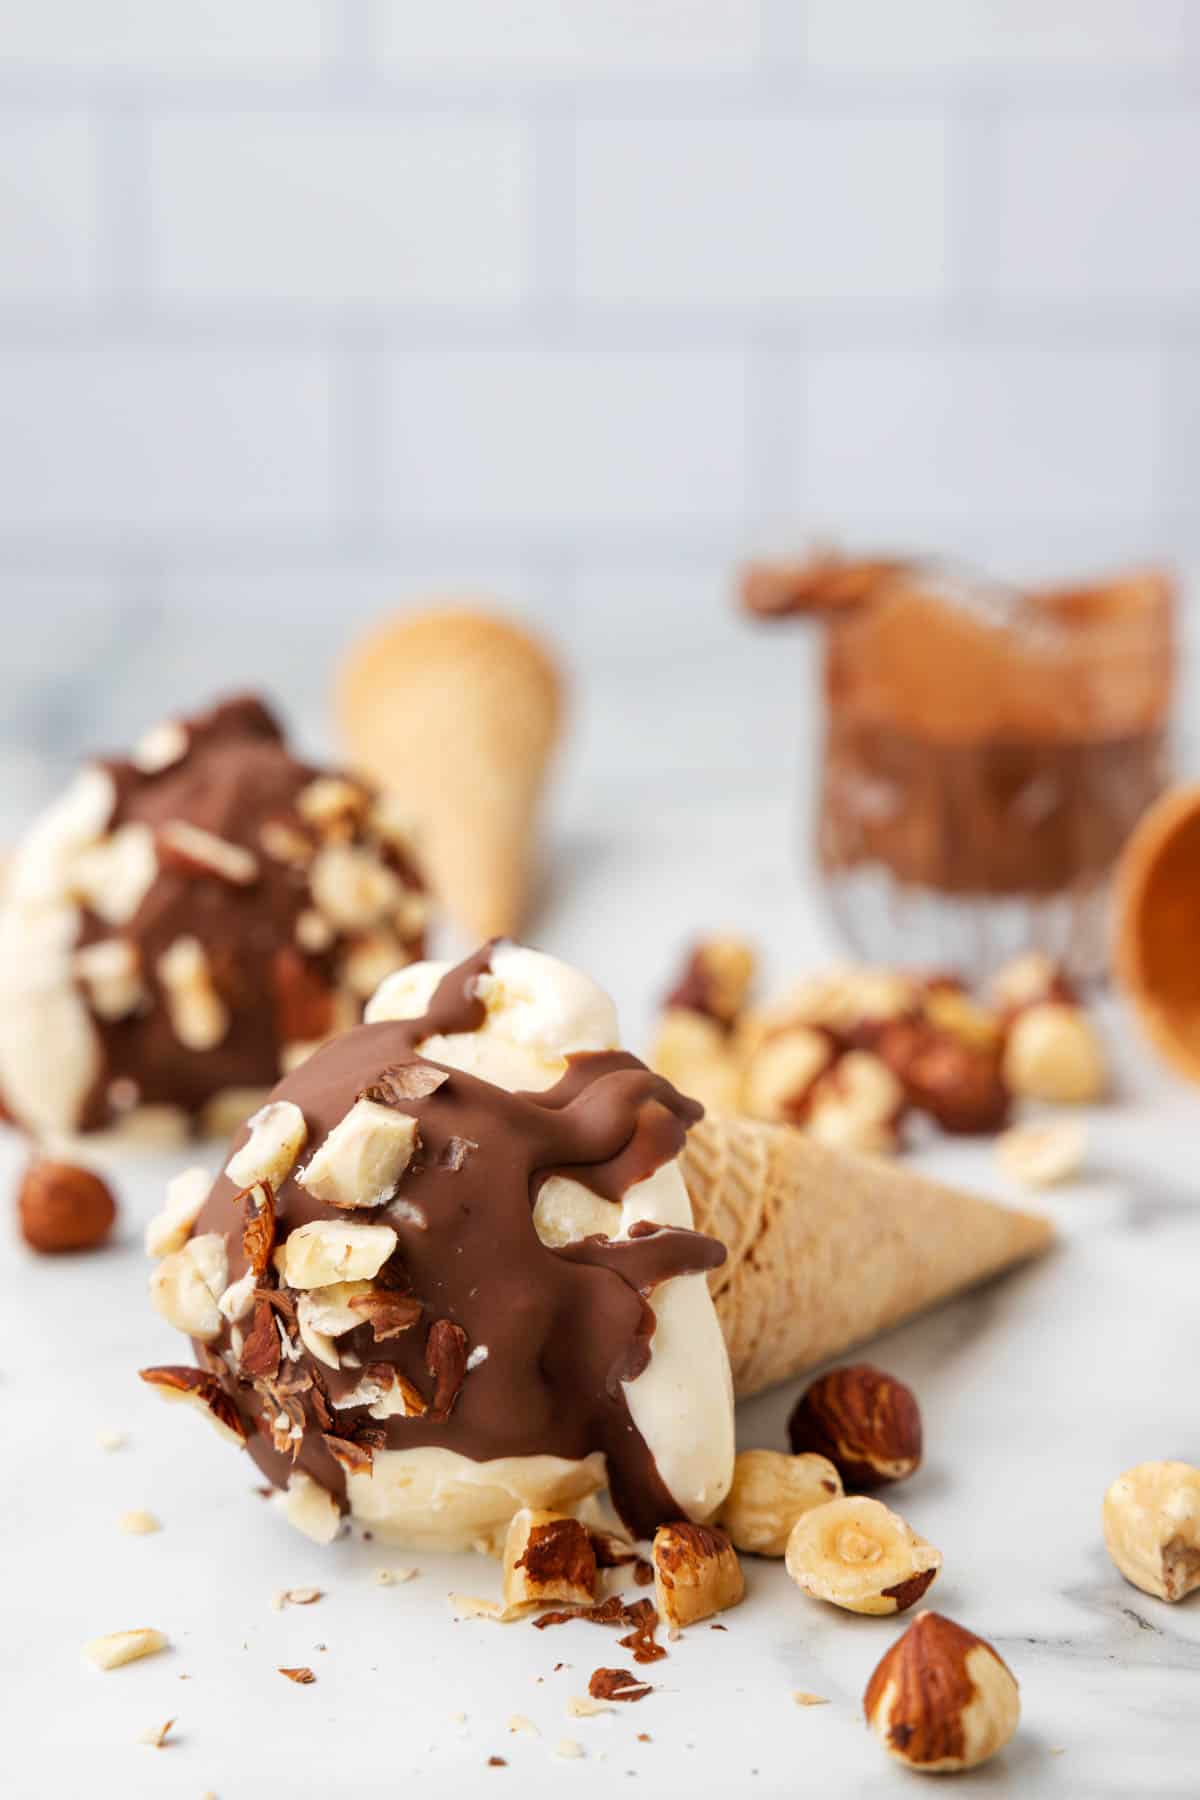 Chocolate hazelnut magic shell on vanilla ice cream in sugar cones.